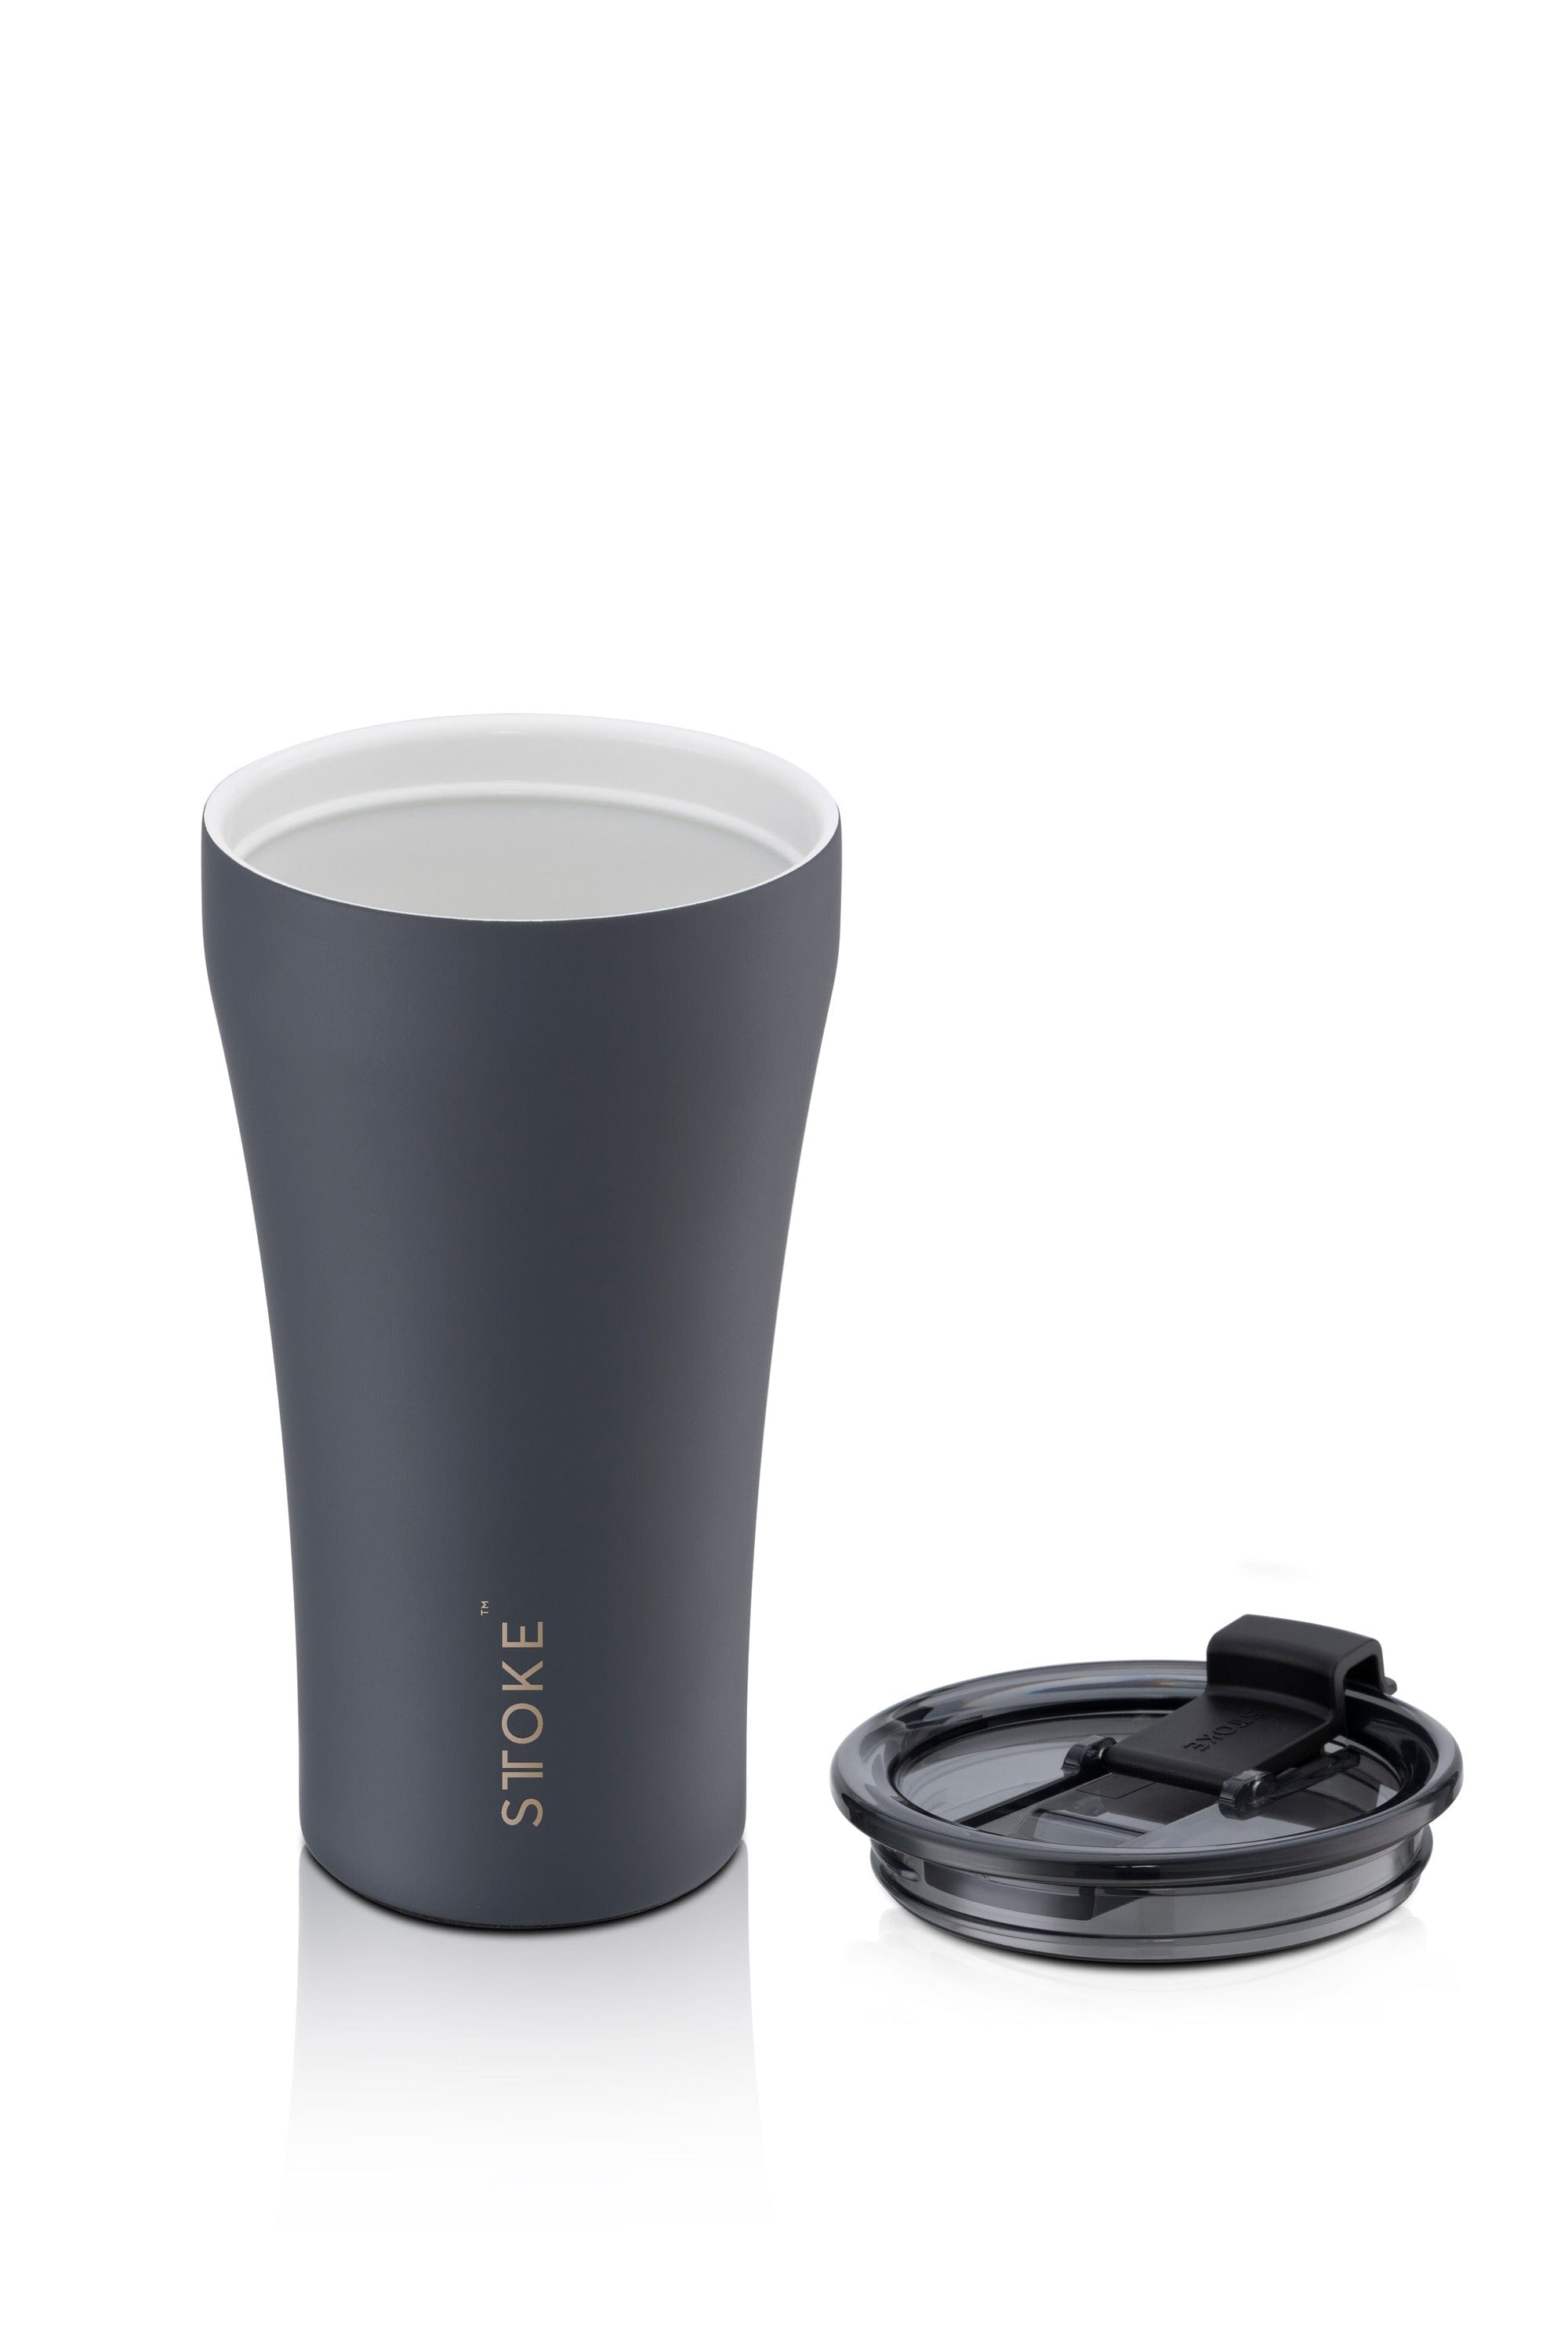 Sttoke Coffee & Tea Cups Sttoke Leakproof - World's First Shatterproof Ceramic Cup